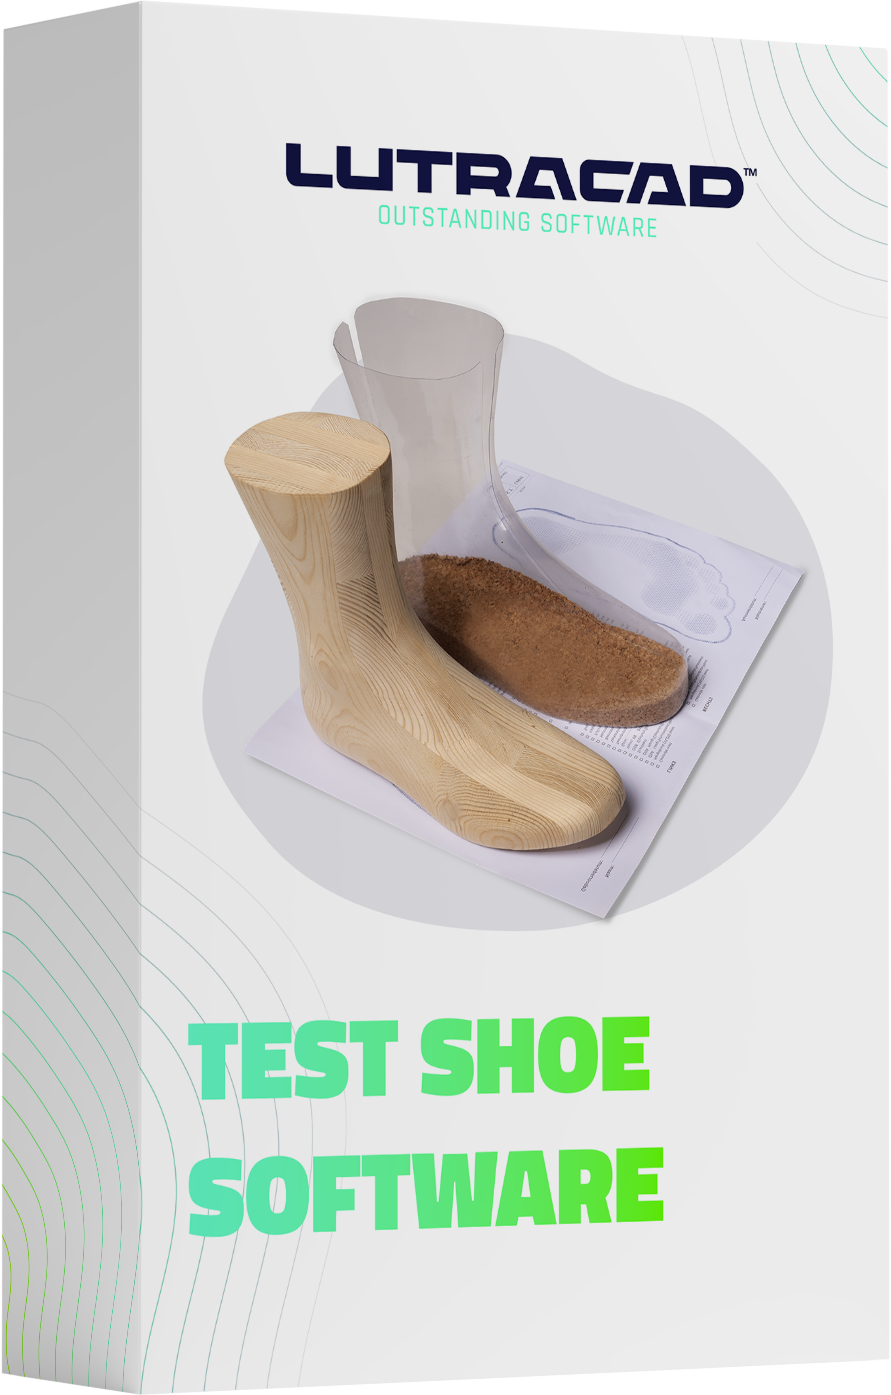 Test shoe software